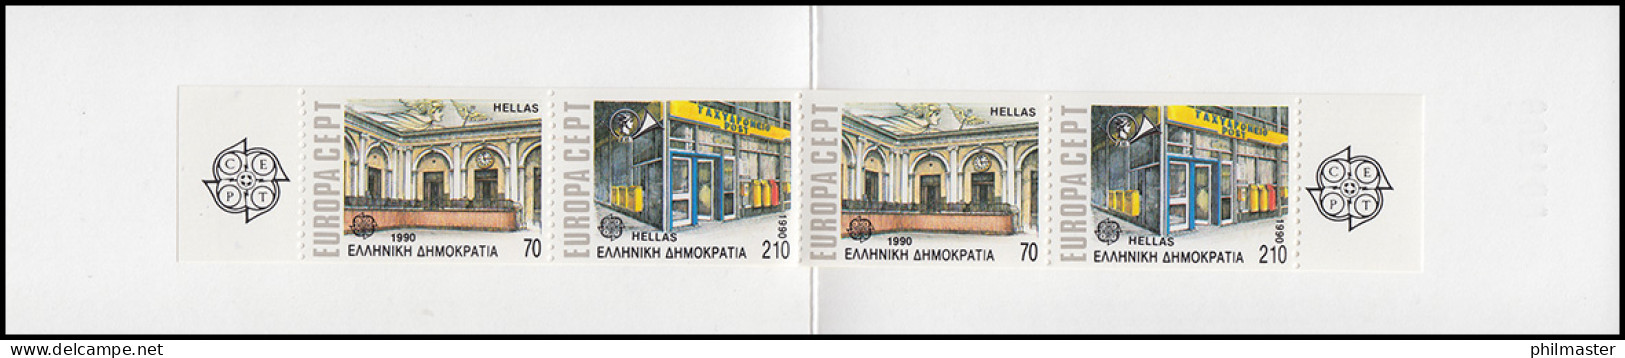 Griechenland Markenheftchen 13 Europa 1990, ** Postfrisch - Carnets